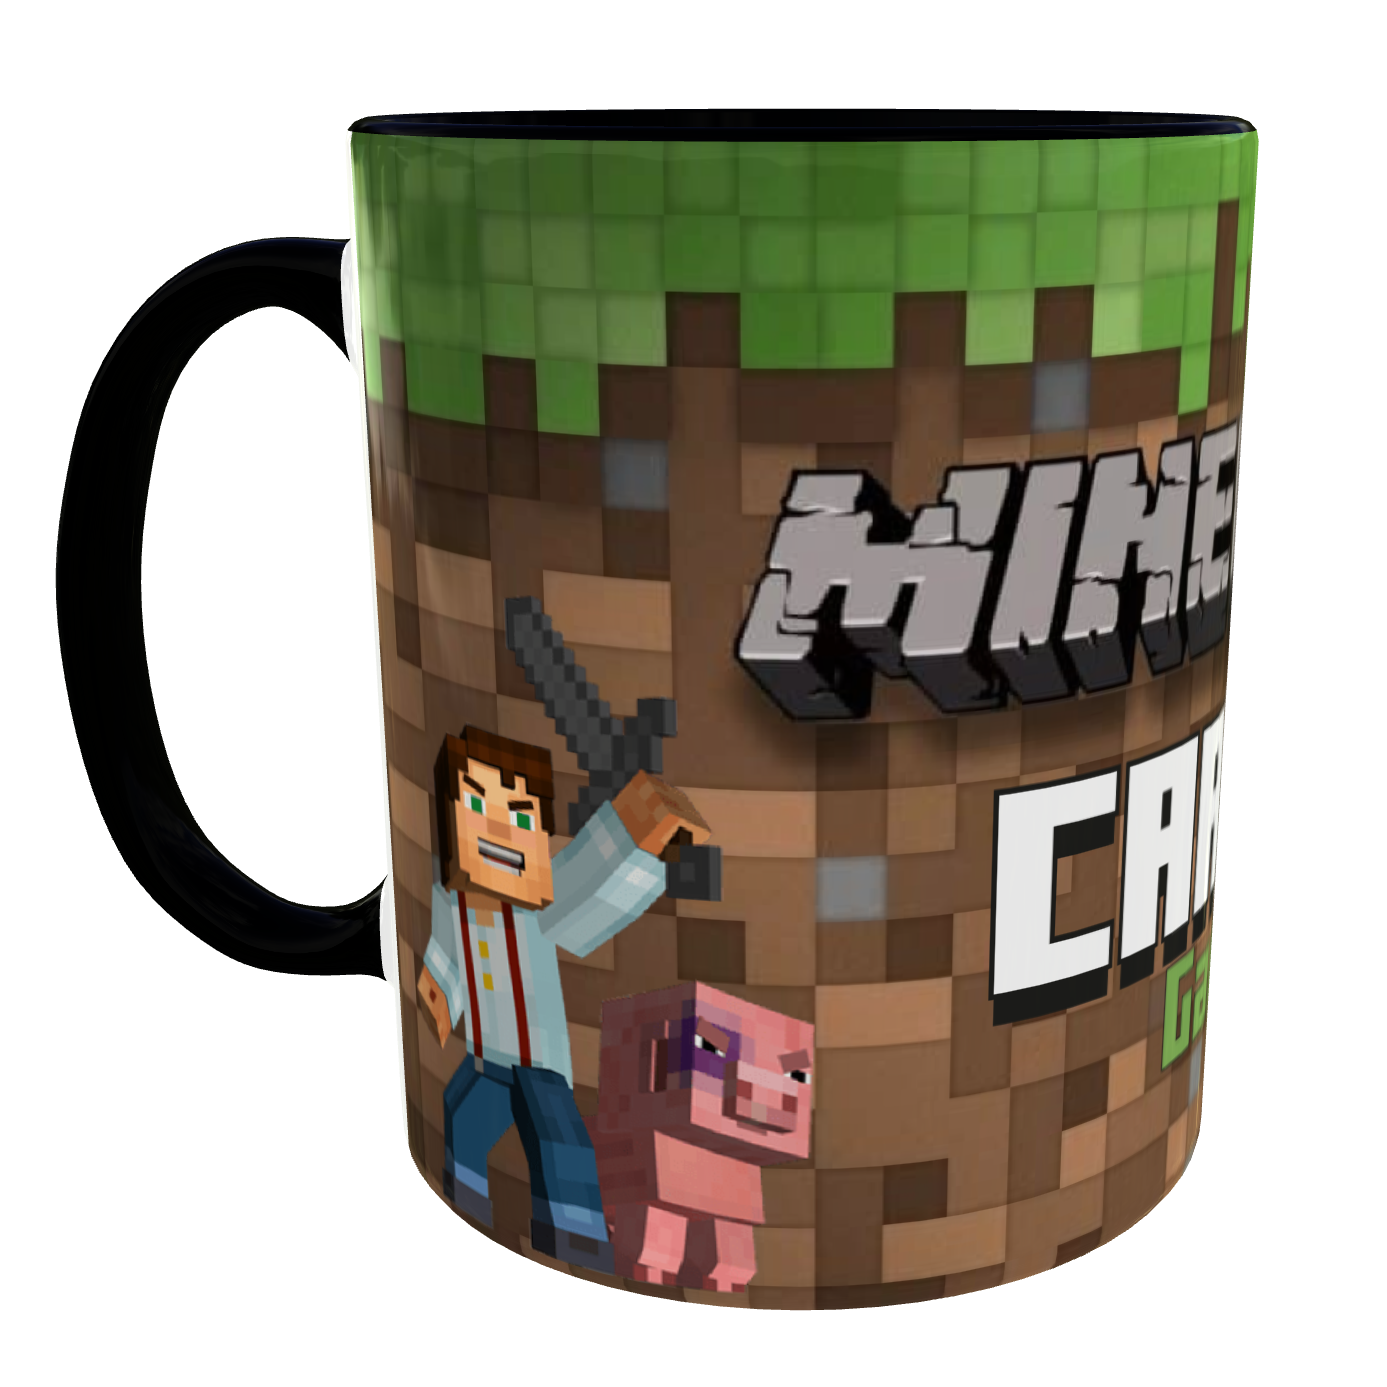 Taza de Minecraft